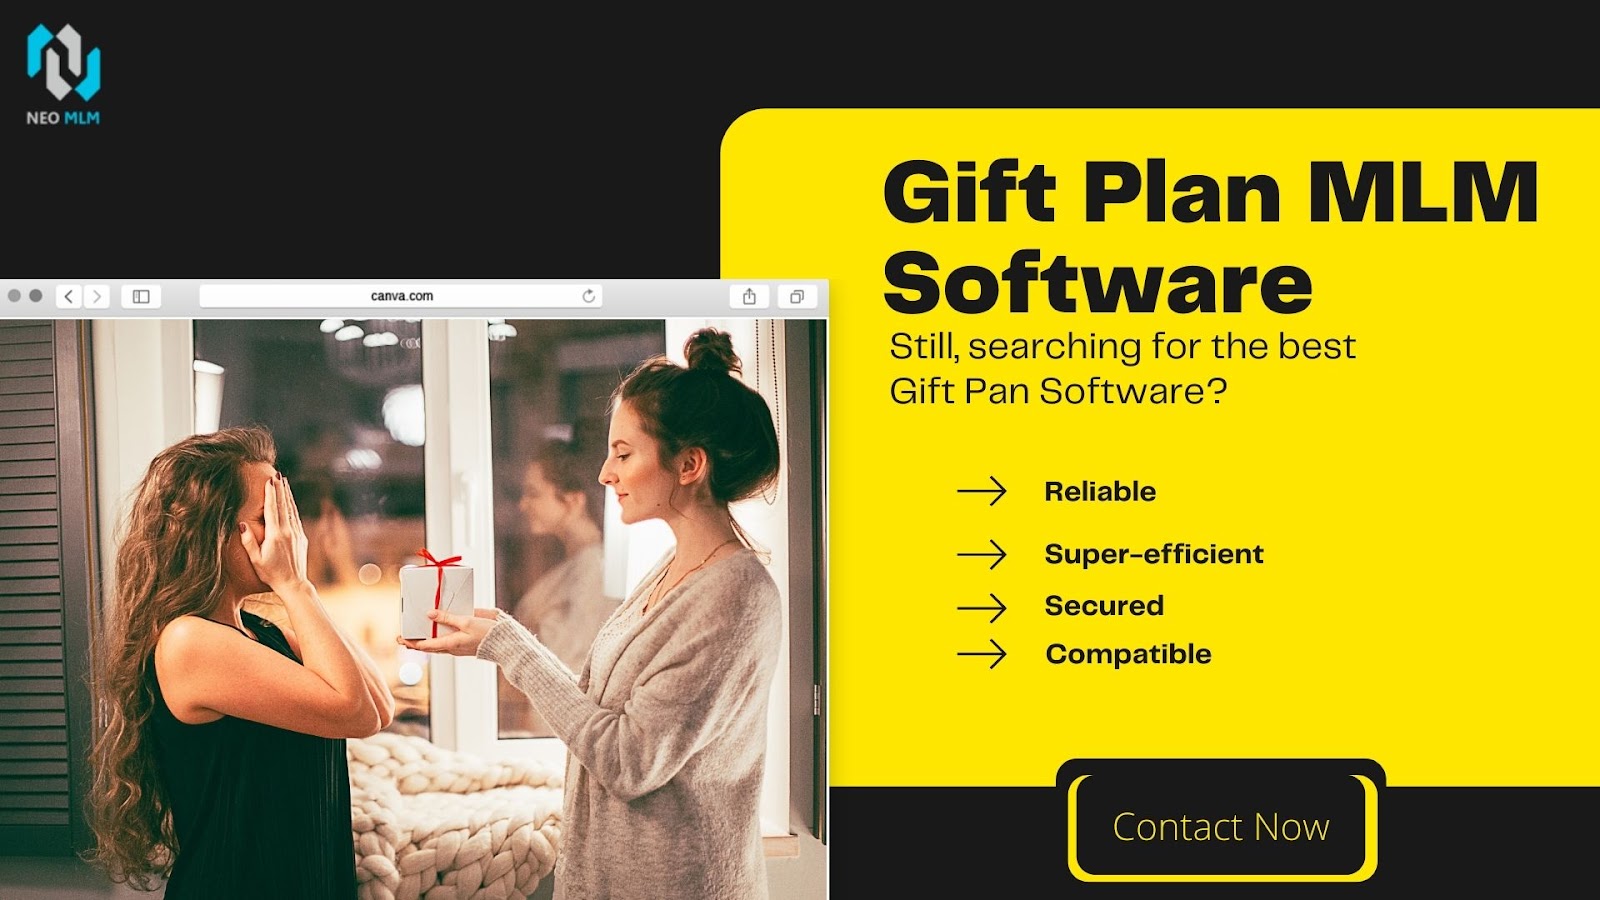 Gift Plan MLM Software